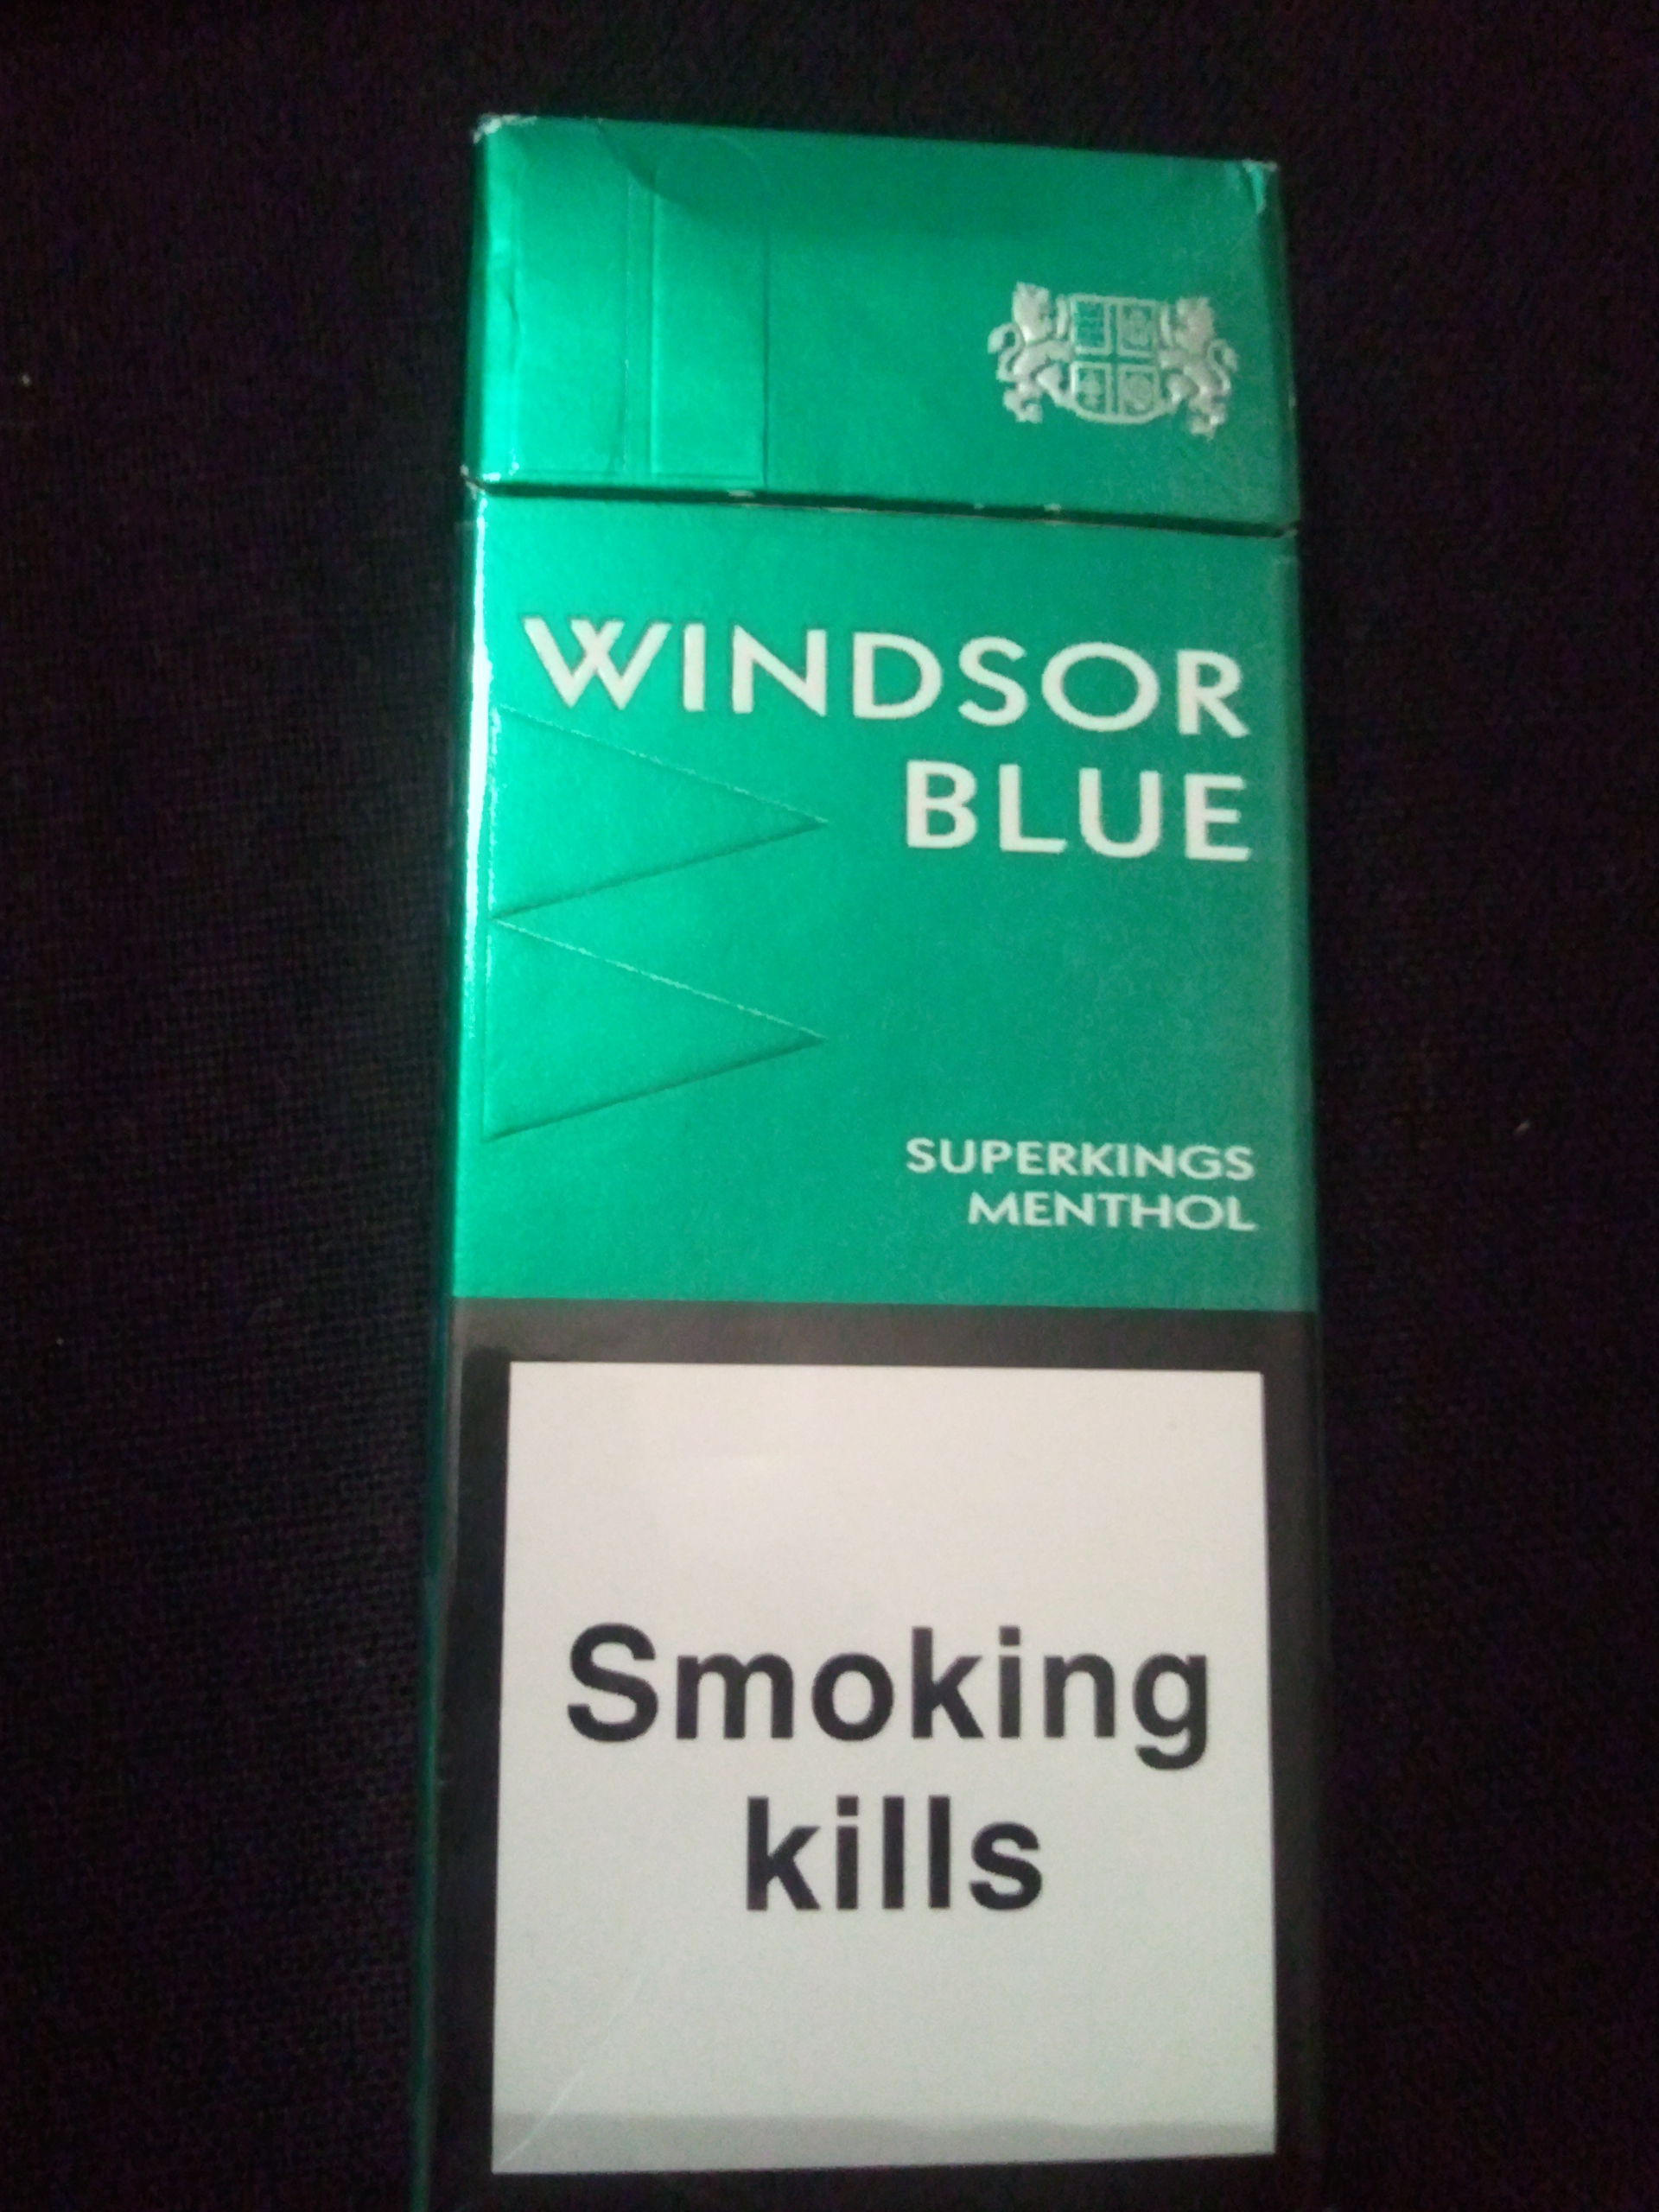 Windsor blue menthol tens .jpg